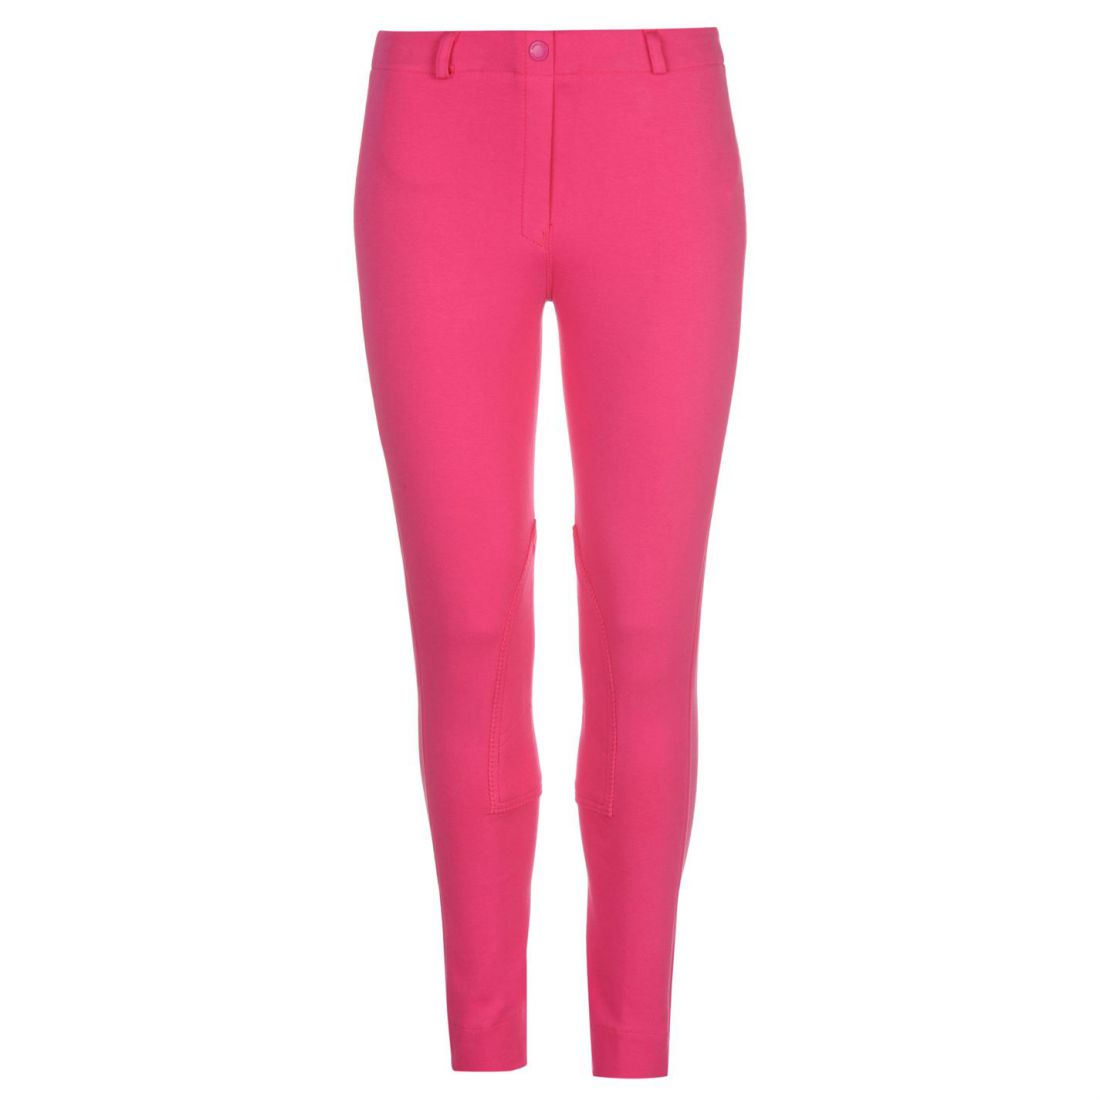 Requisite Lightweight Jodhpurs Stretch Pants Trousers Womens Ladies | eBay